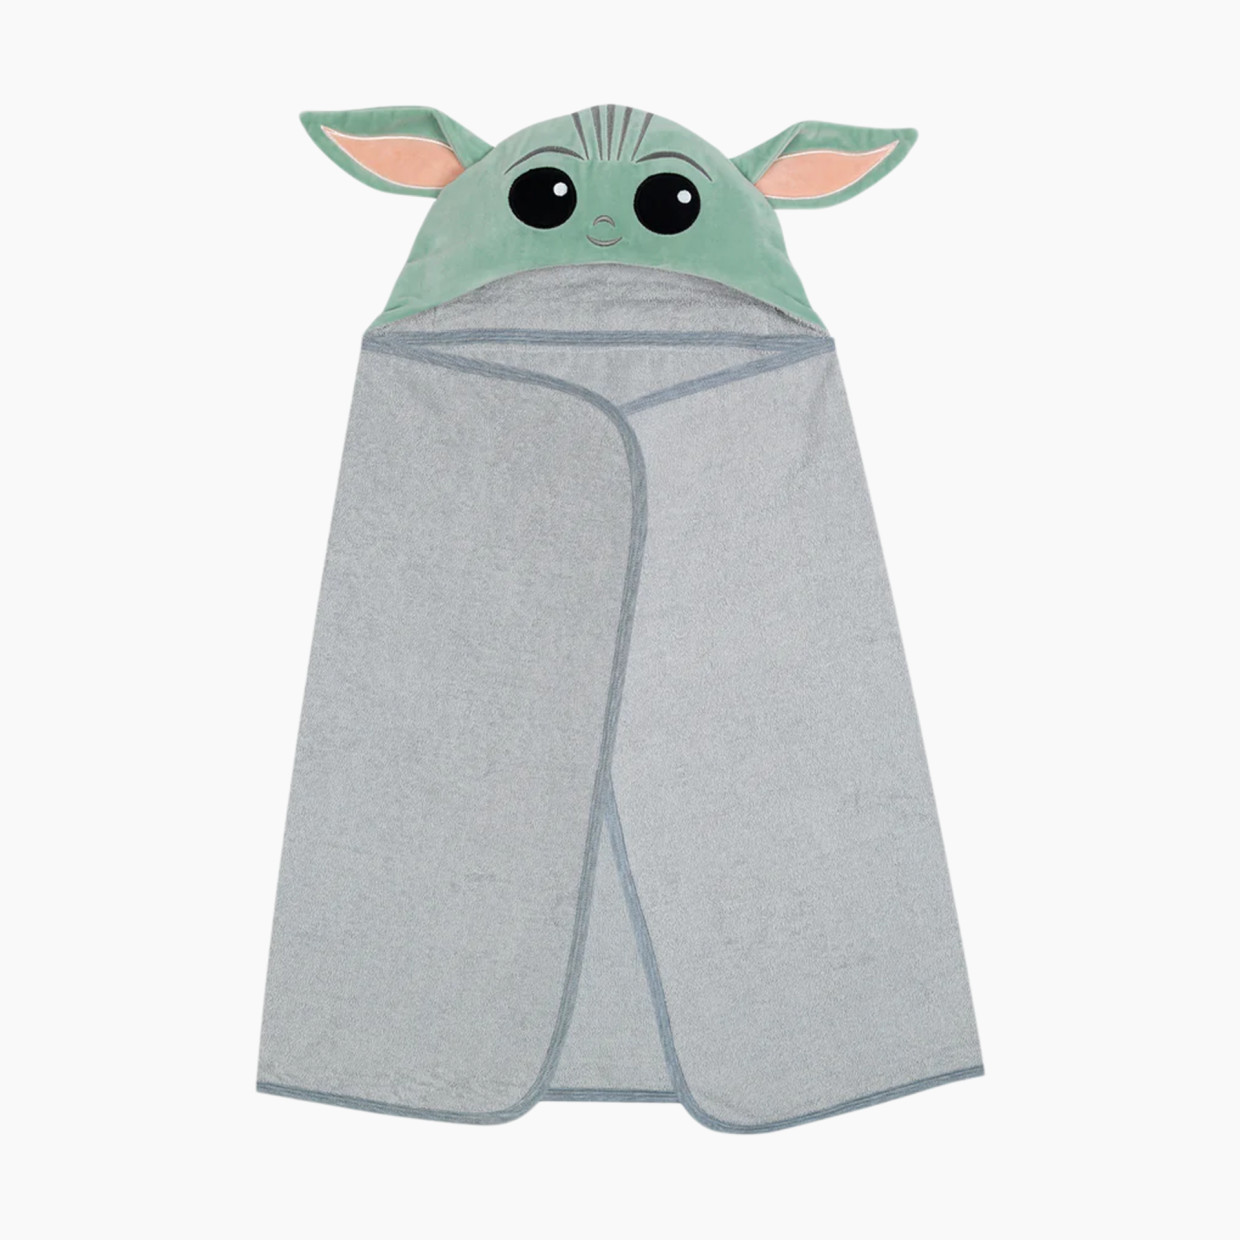 Lambs & Ivy Hooded Bath Towel - Star Wars The Child.